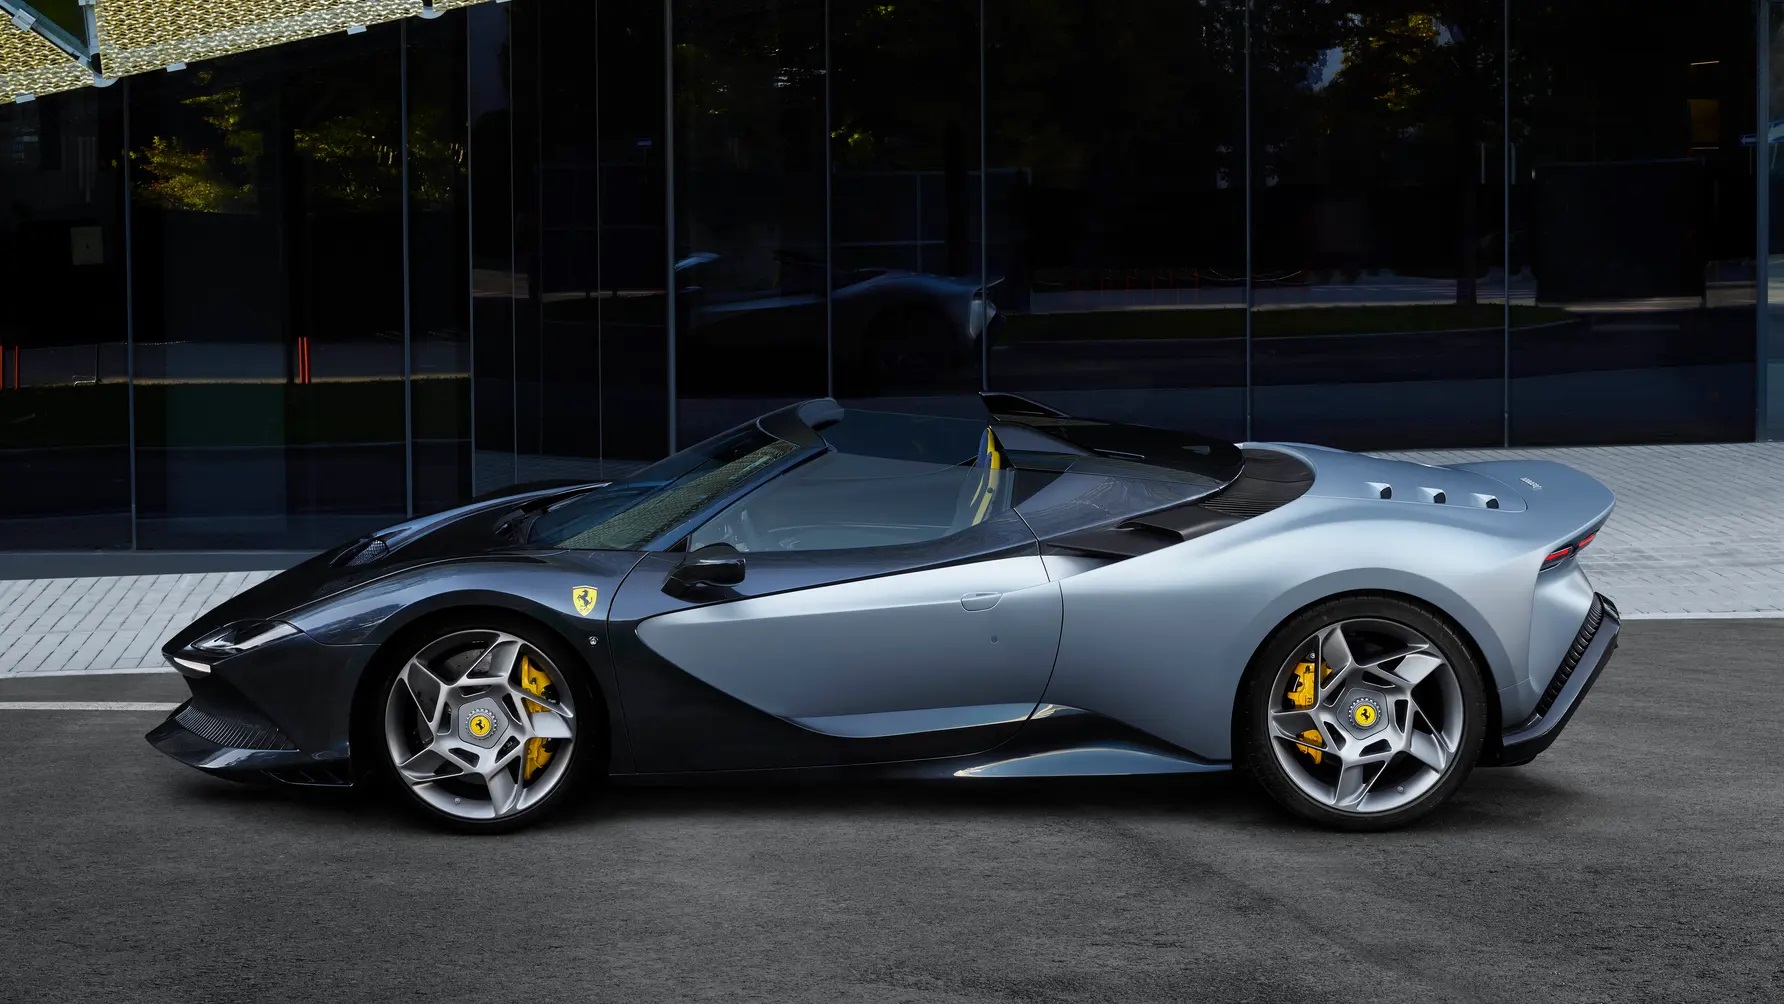 Meet the new Ferrari One-Off: The Ferrari SP-8